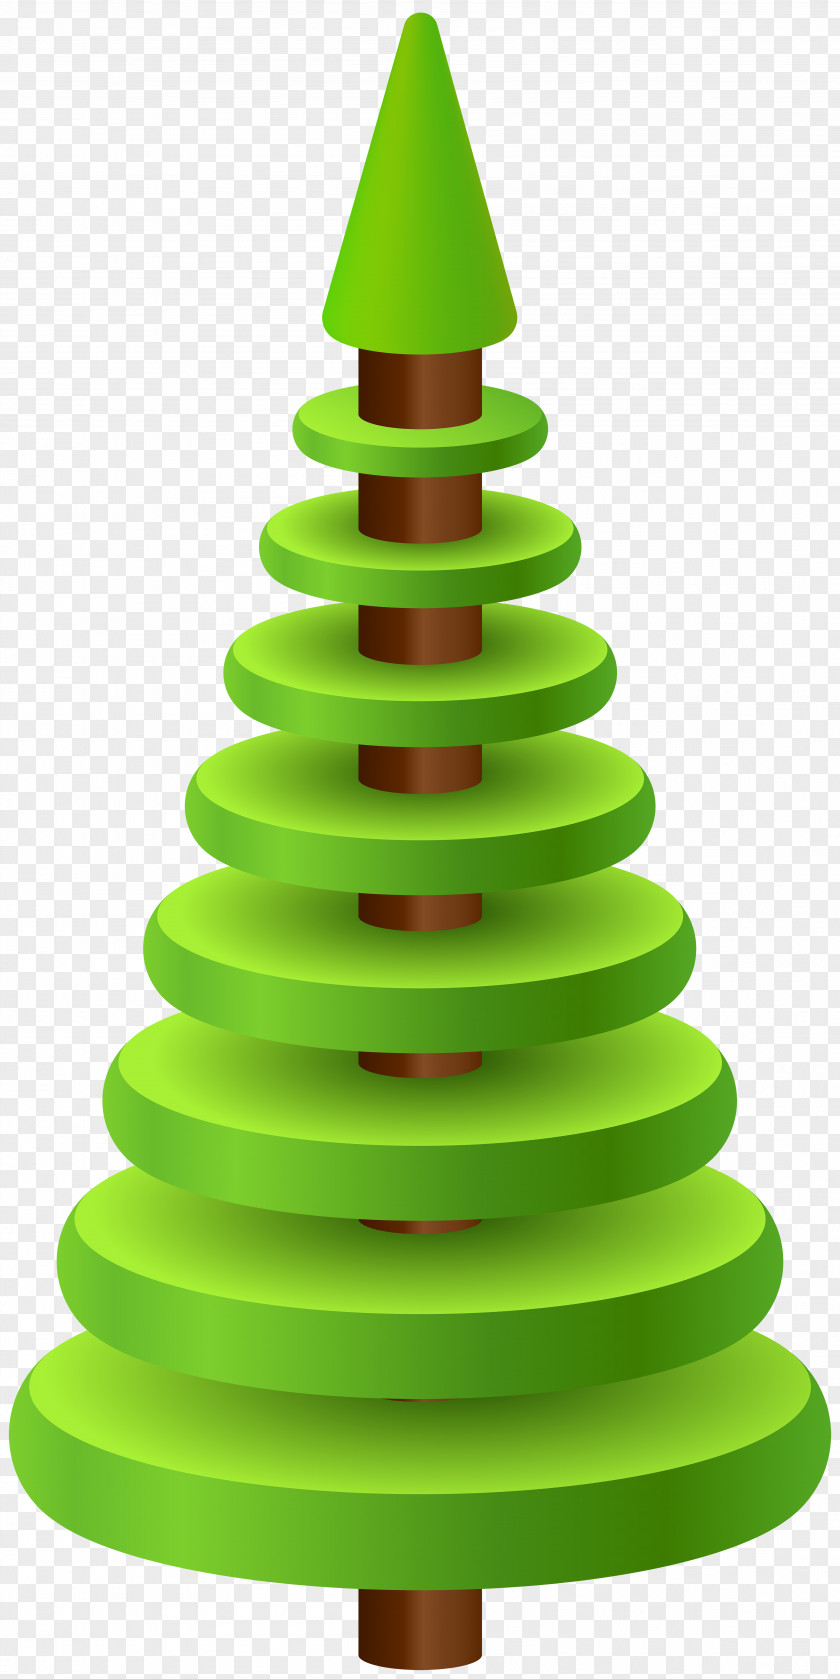 Saplings Badge Vector Graphics Christmas Day Royalty-free Image Tree PNG